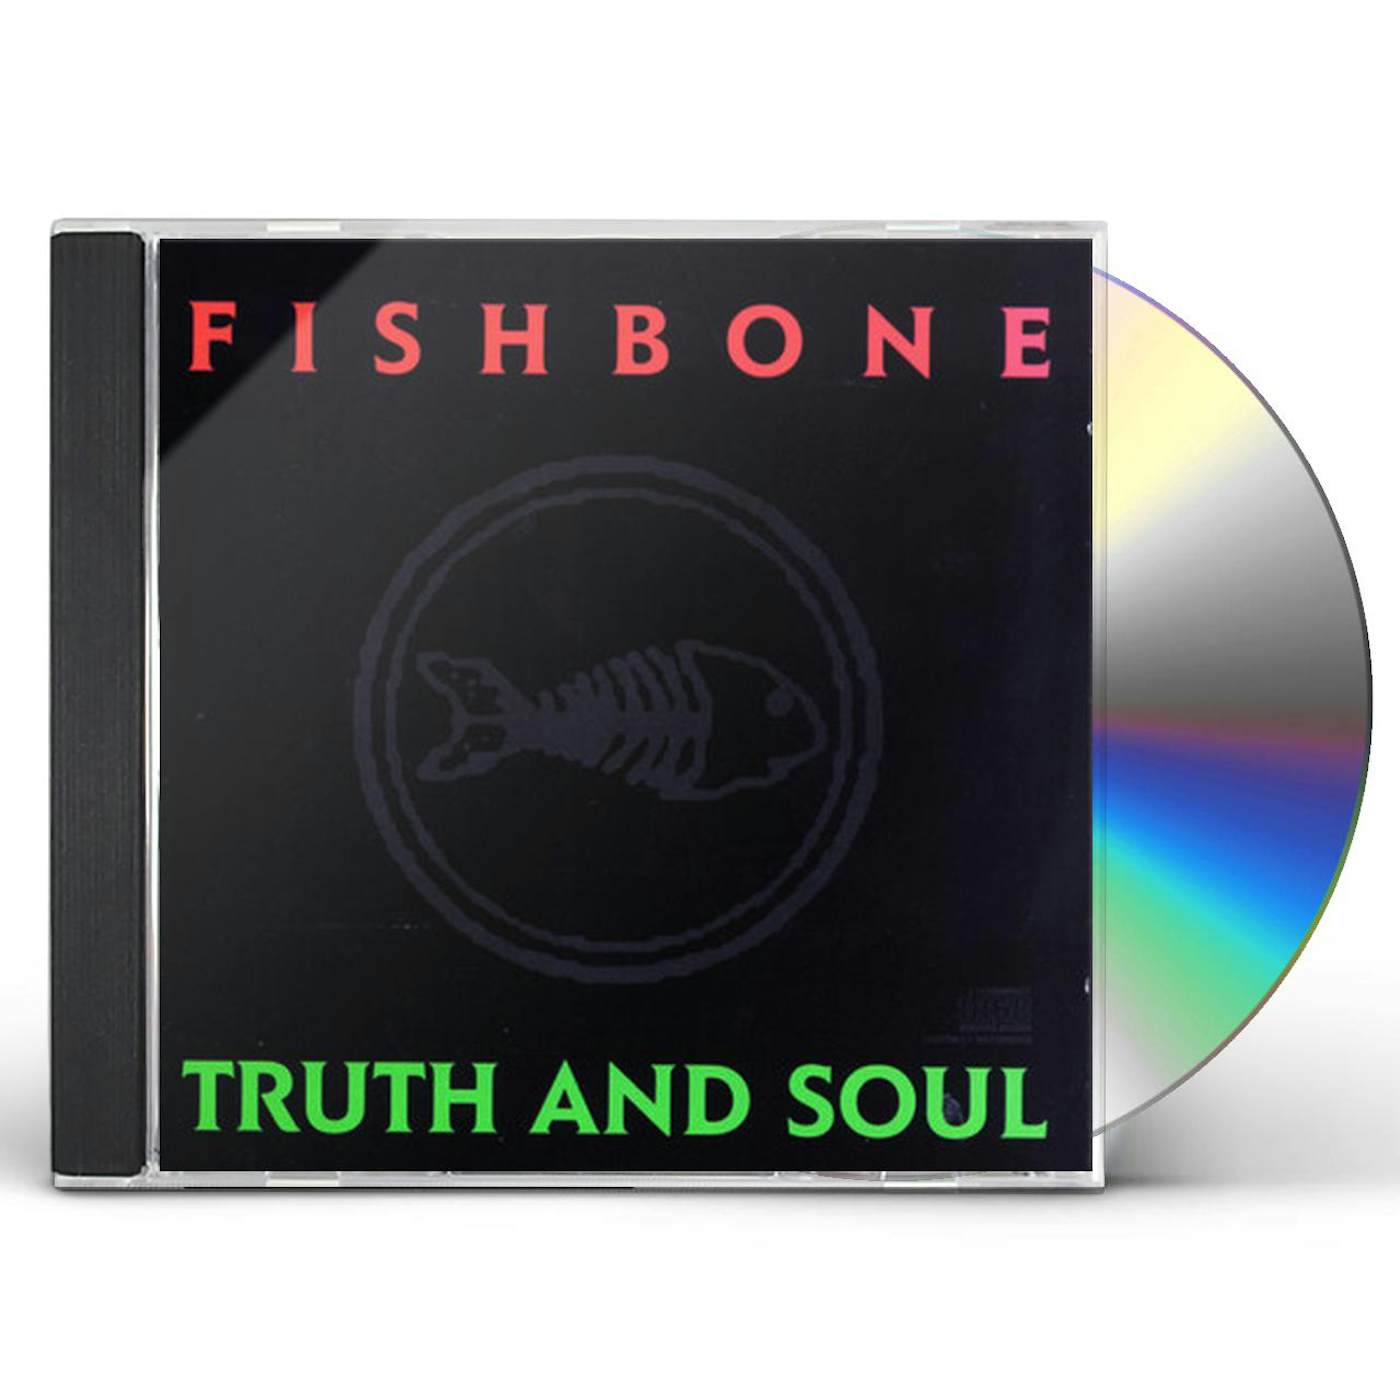 Intrinsically Intertwined Vinyl Record - Fishbone